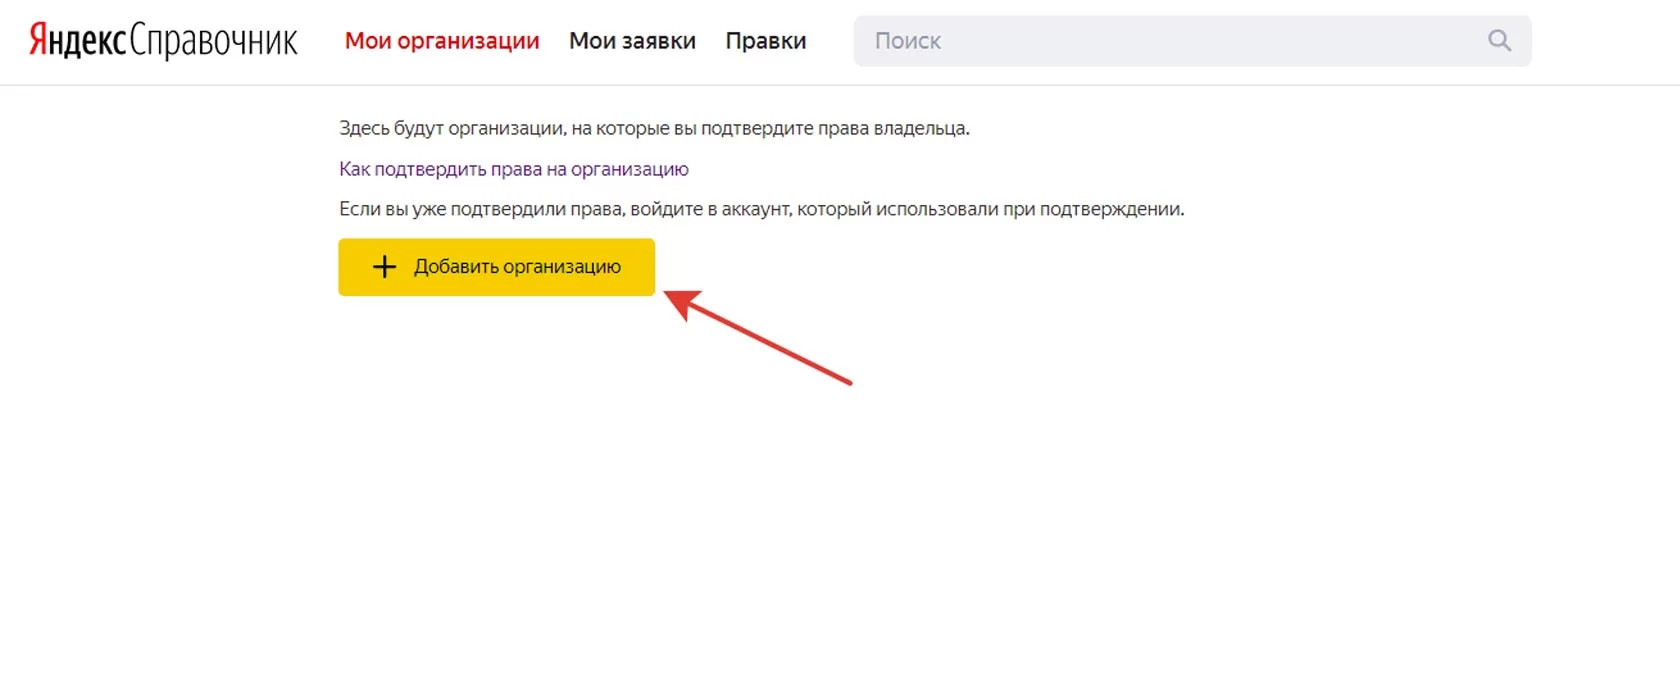 Яндекс справочник Мои организации